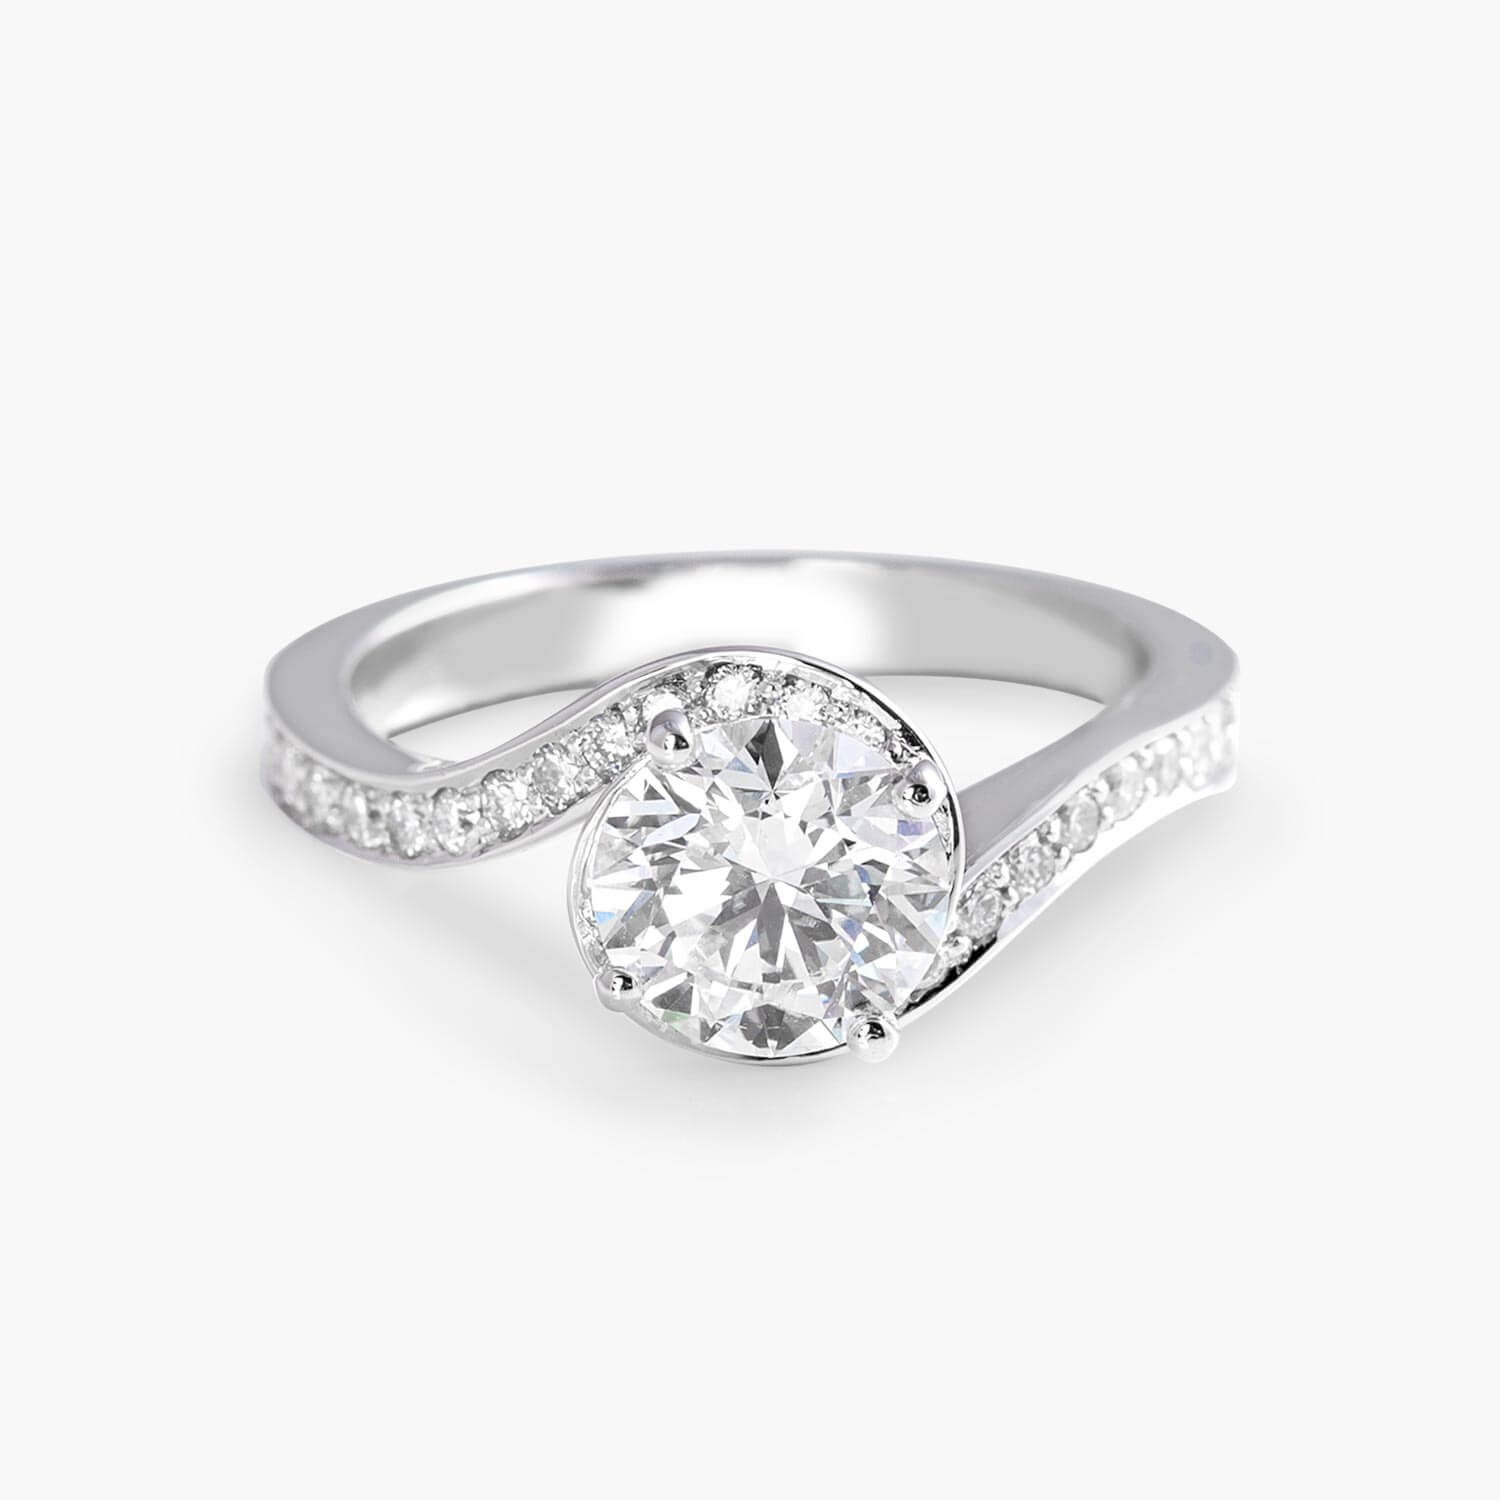 James’ Bespoke Diamond Engagement Ring